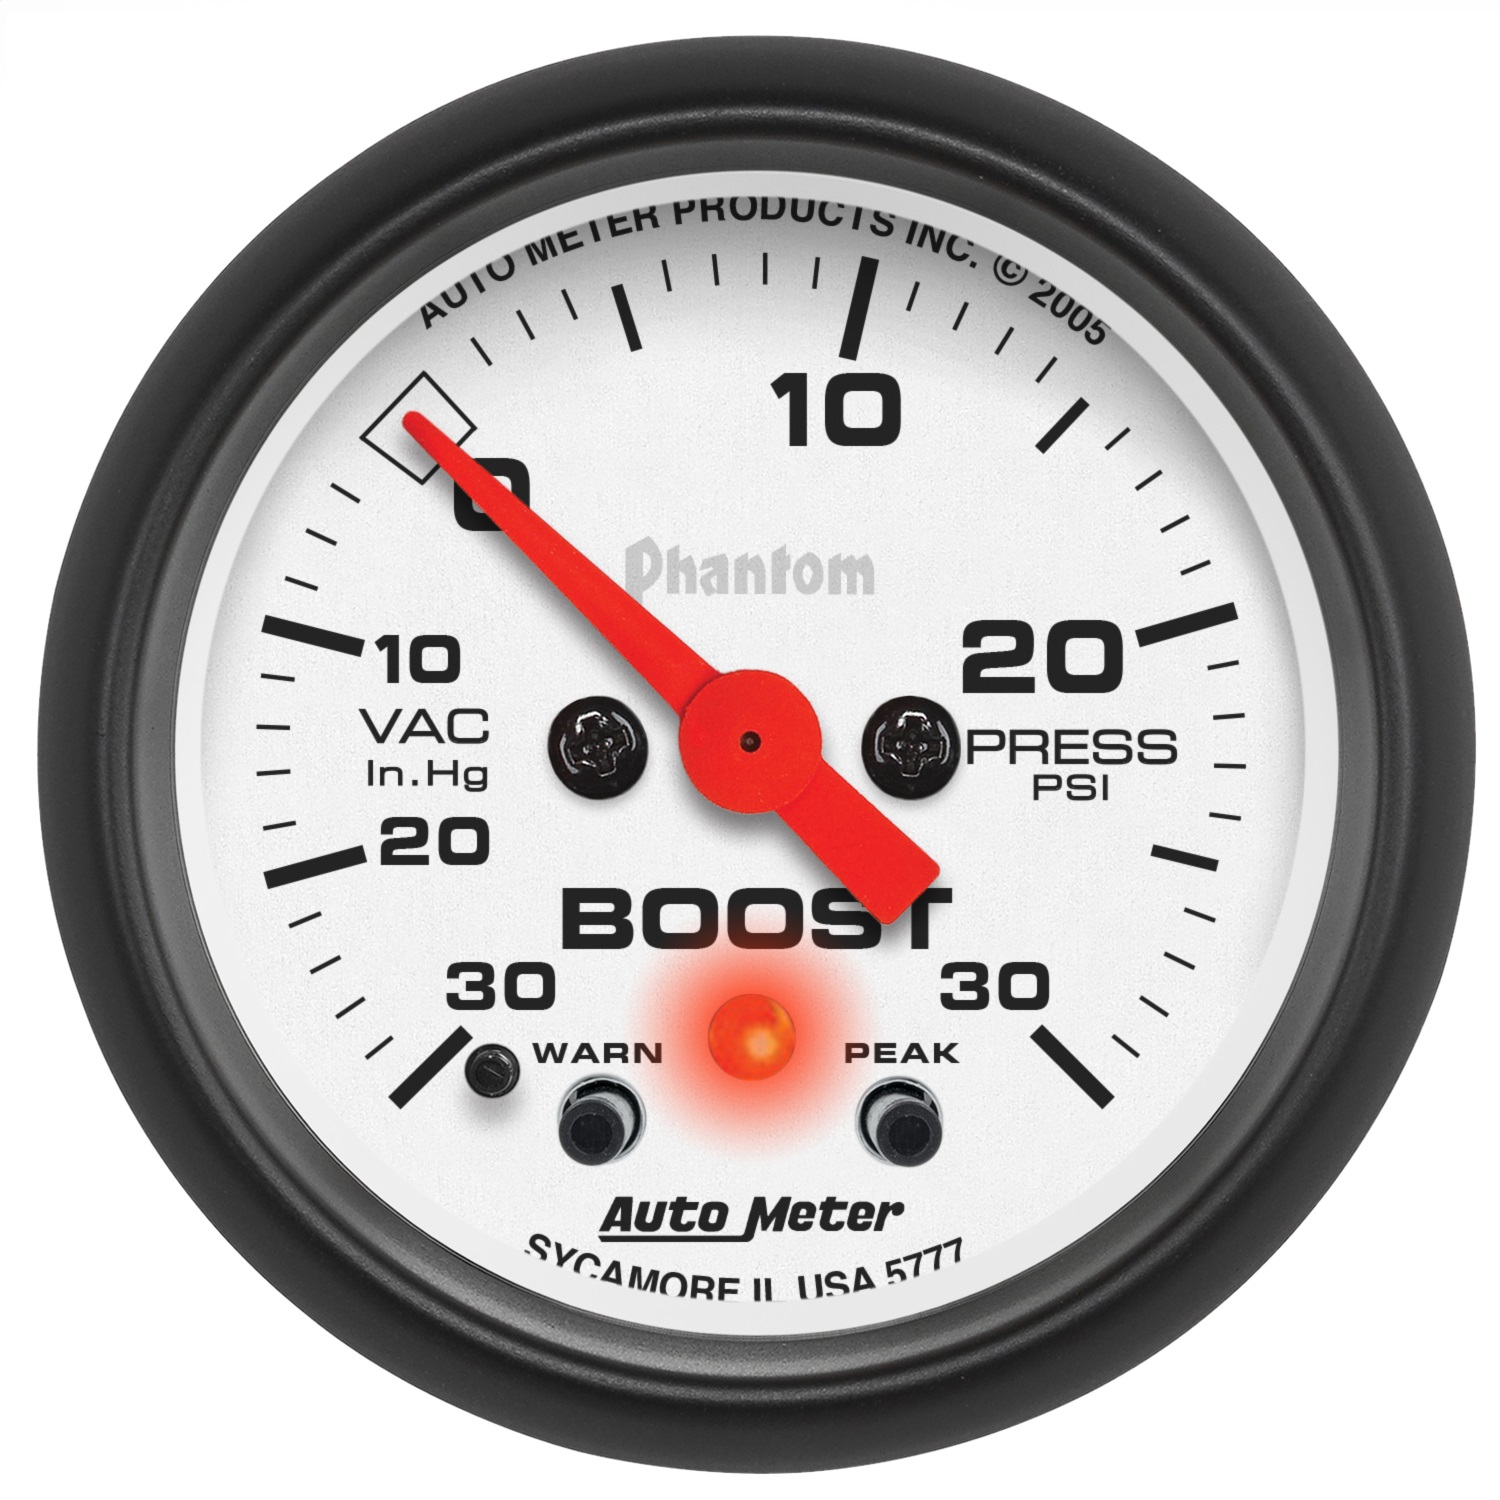 Auto Meter Auto Meter 5777 Phantom; Electric Boost/Vacuum Gauge